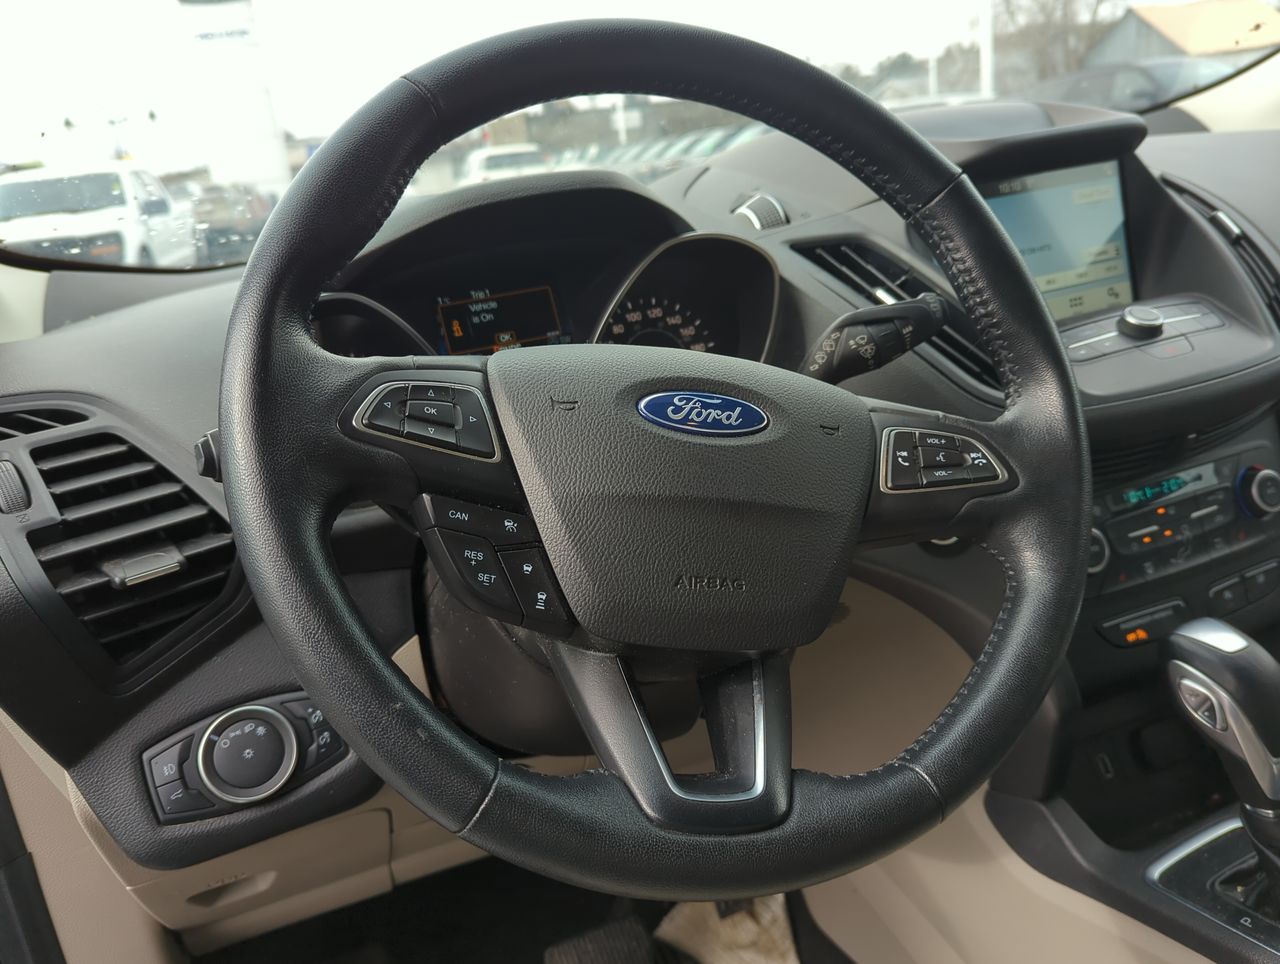 2019 Ford Escape - 21388A Full Image 14